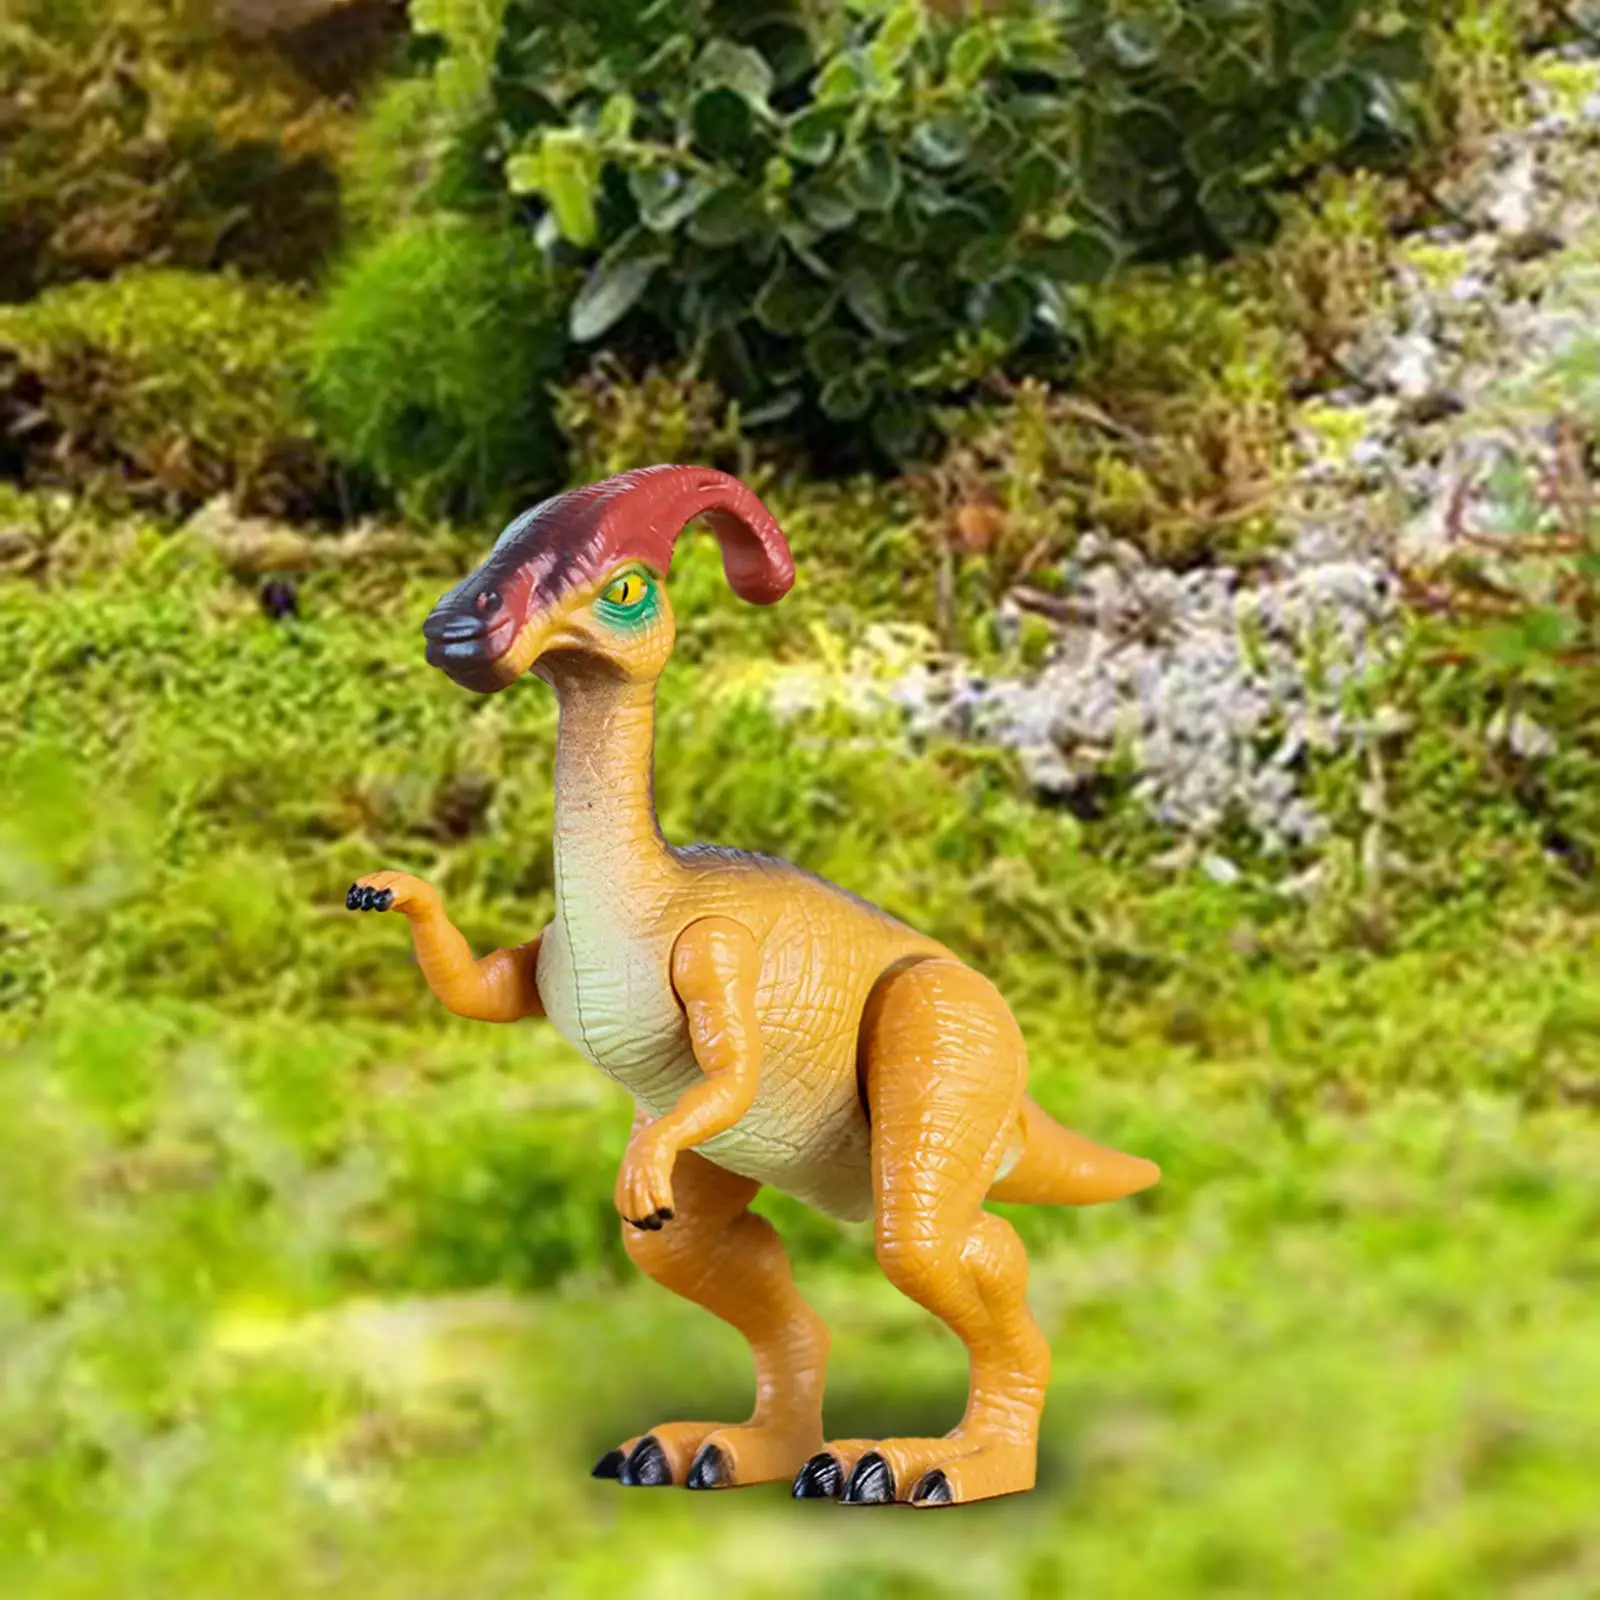 Dinosaur Action Figure Toy Simulation Animal Model for Cars Desktop Travel